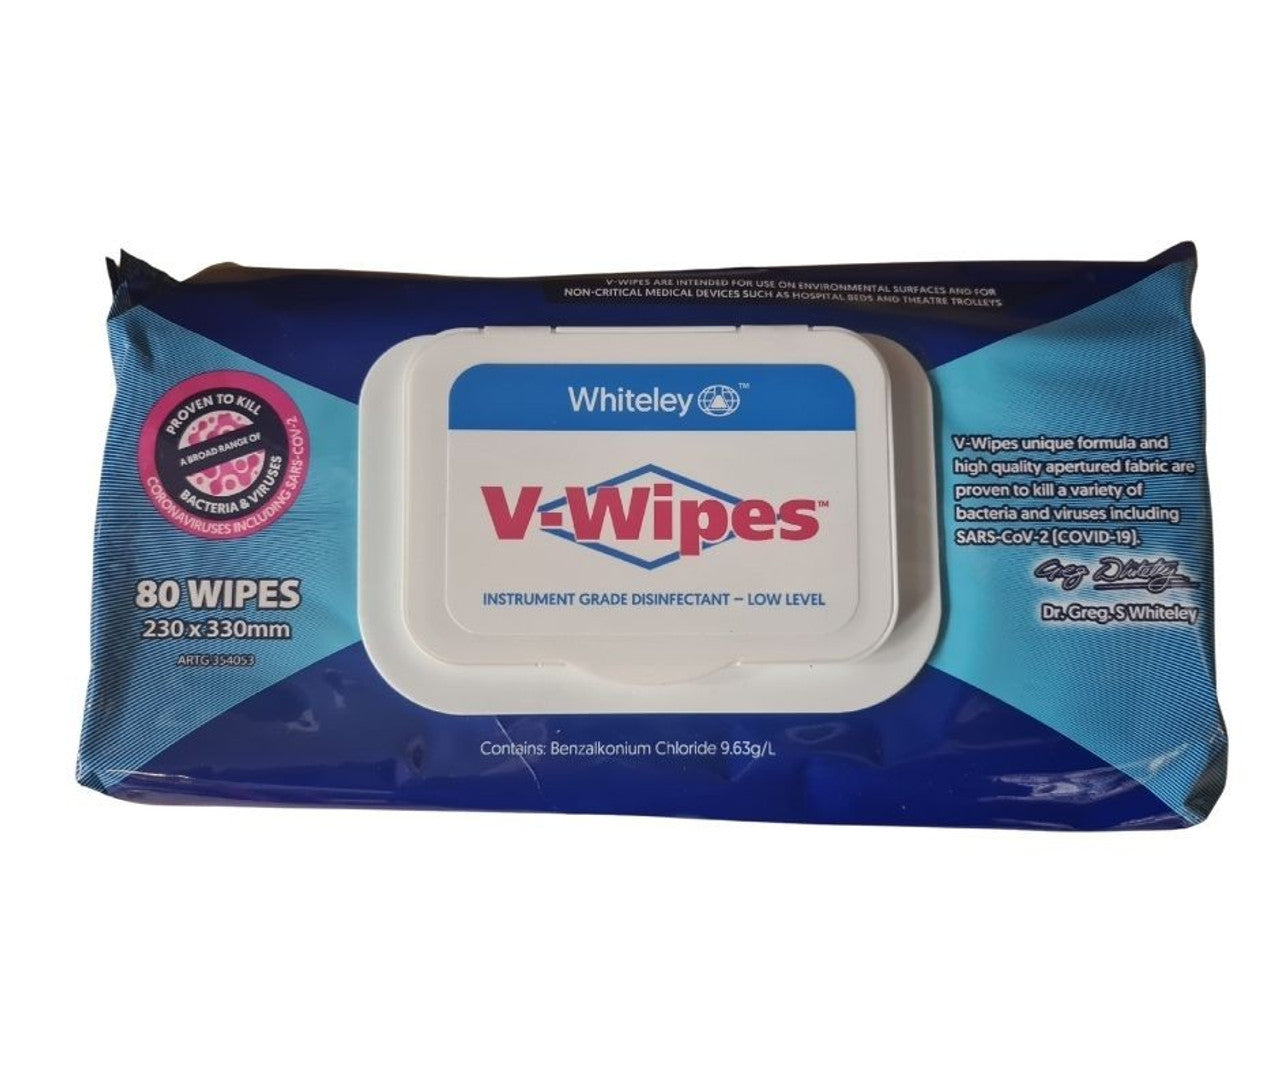 V-Wipes Hospital Grade Disinfectant Wipes 80pk